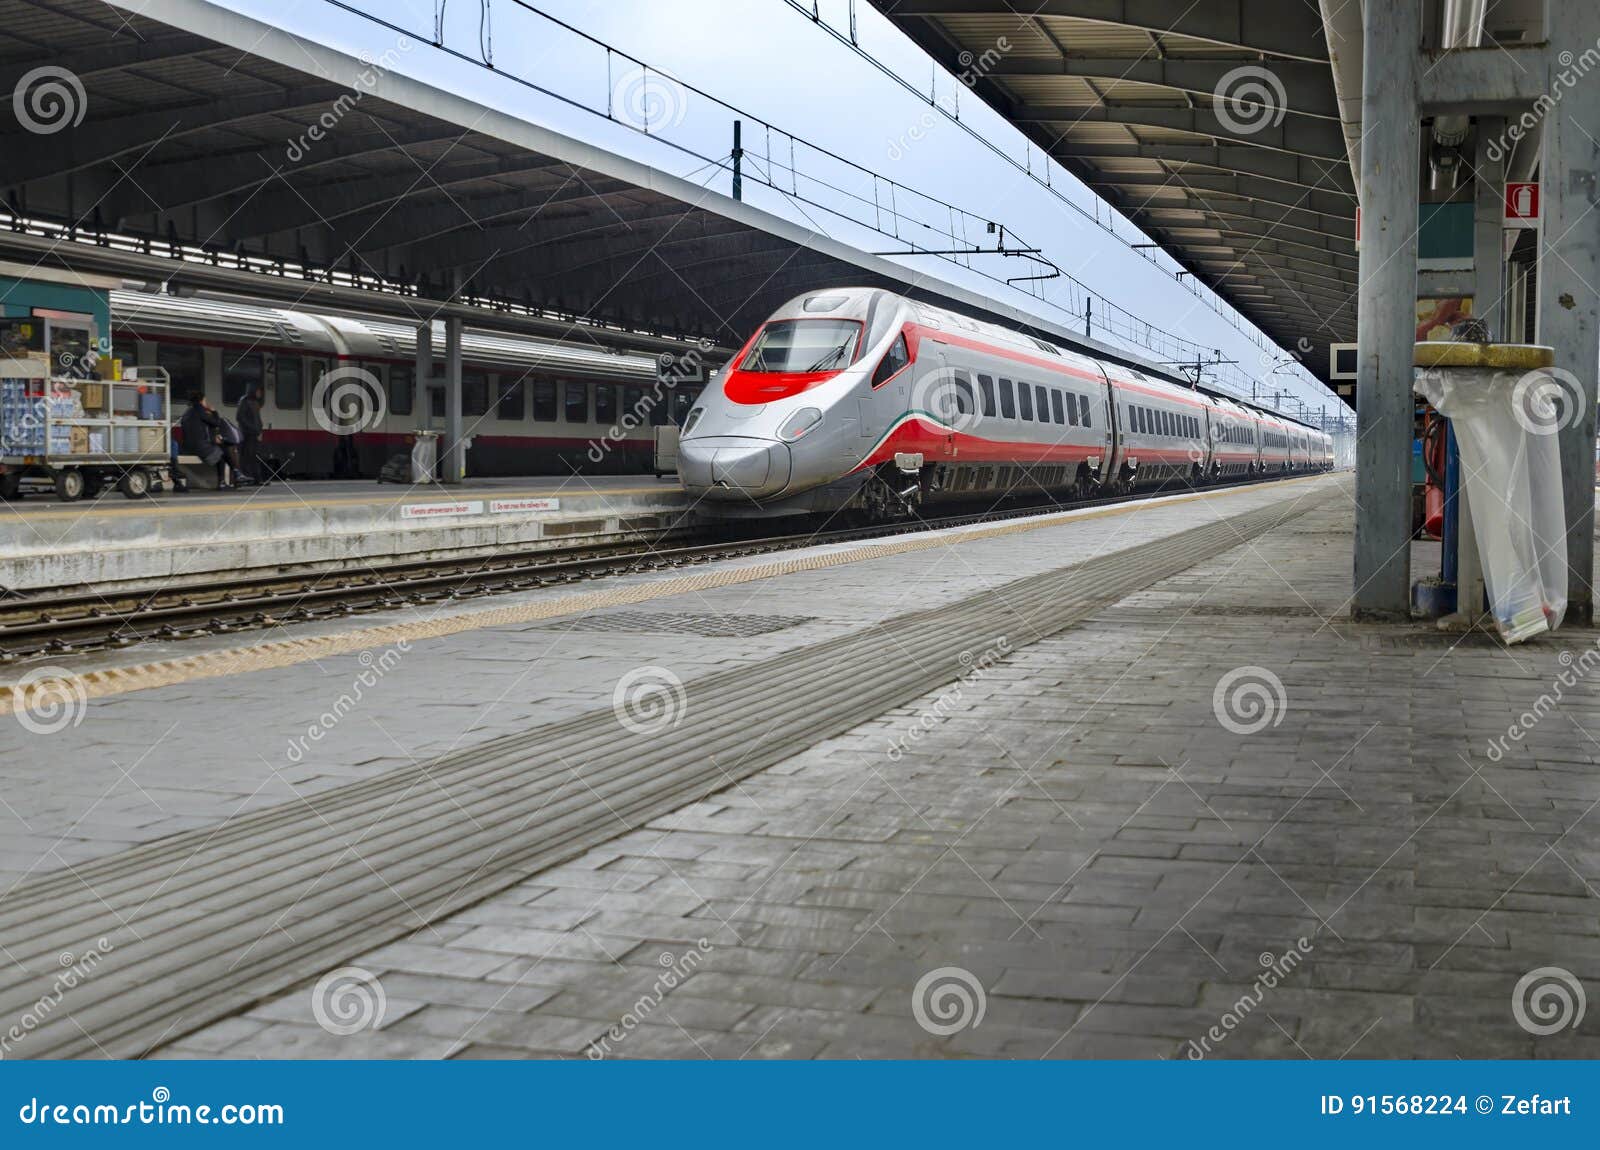 trenitalia freccia rossa train at the platform